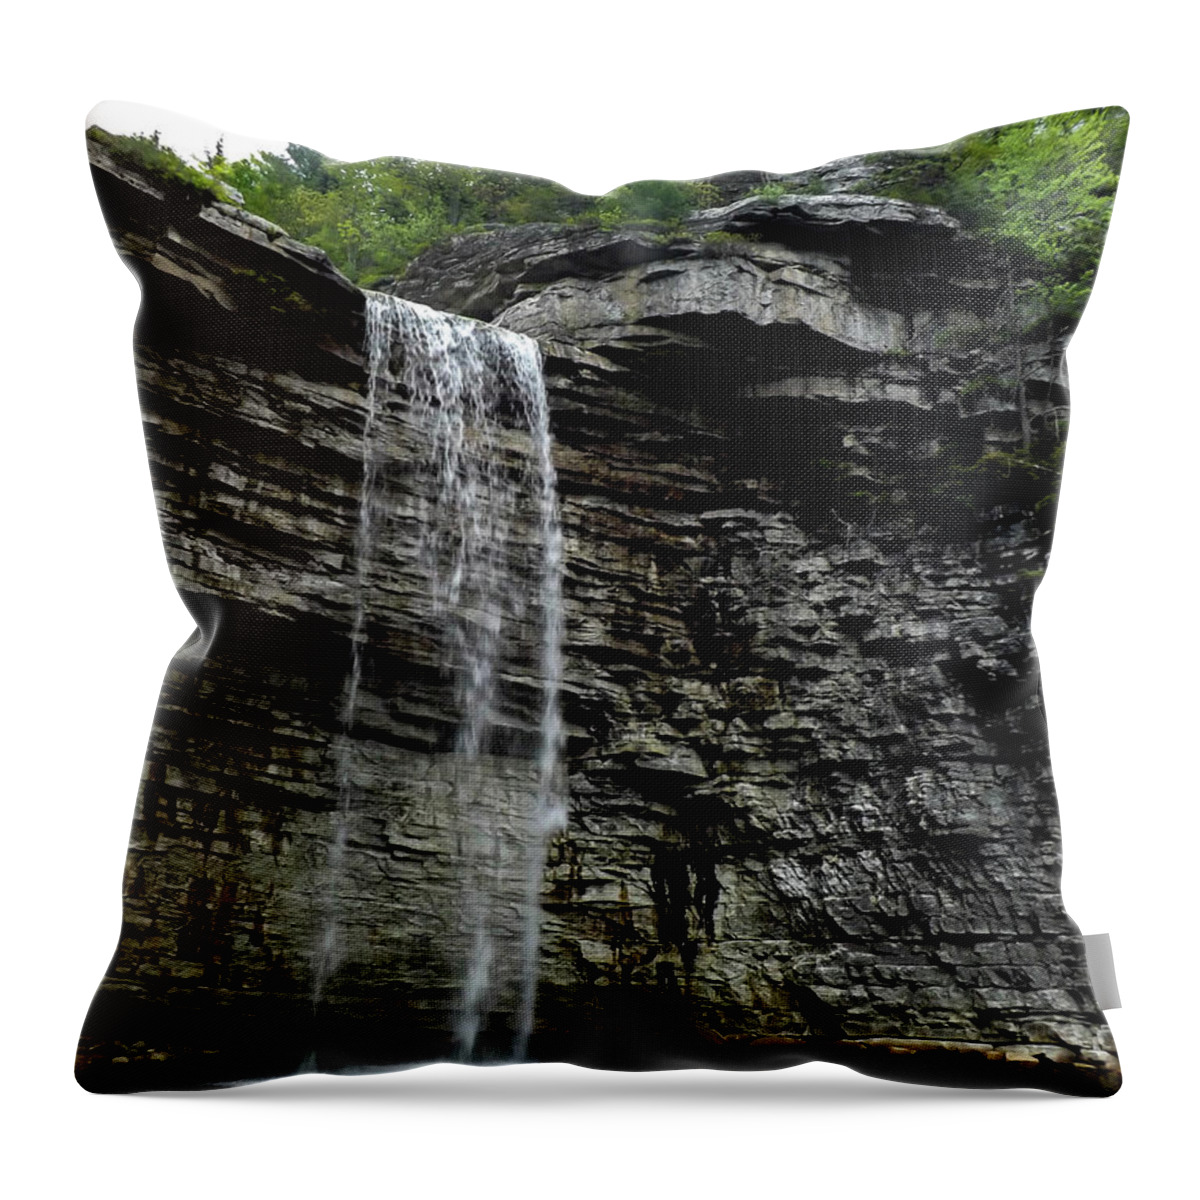  Throw Pillow featuring the photograph Lake Minnewaska by Alan Goldberg